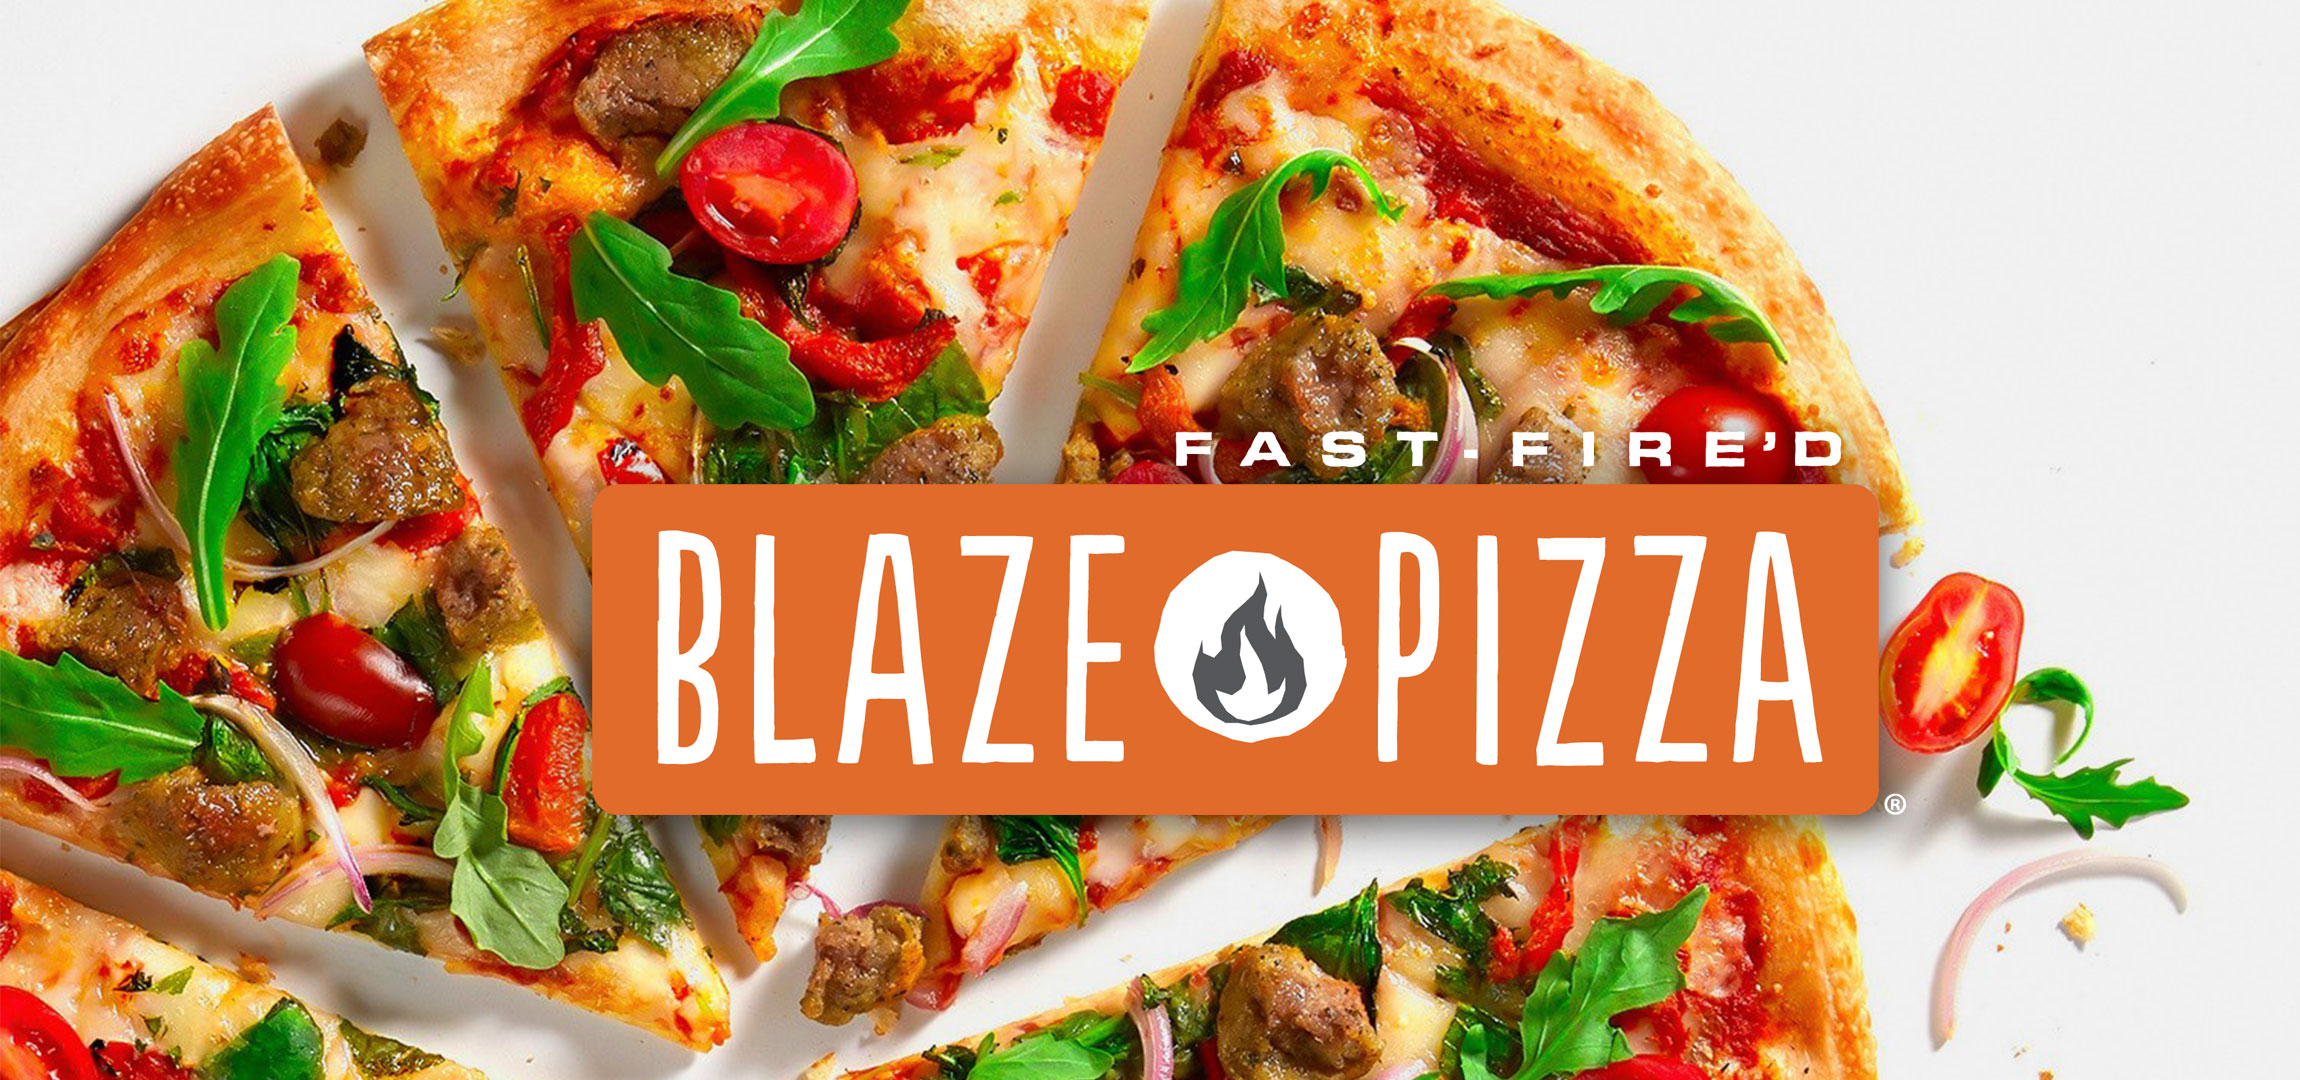 blaze pizza apply